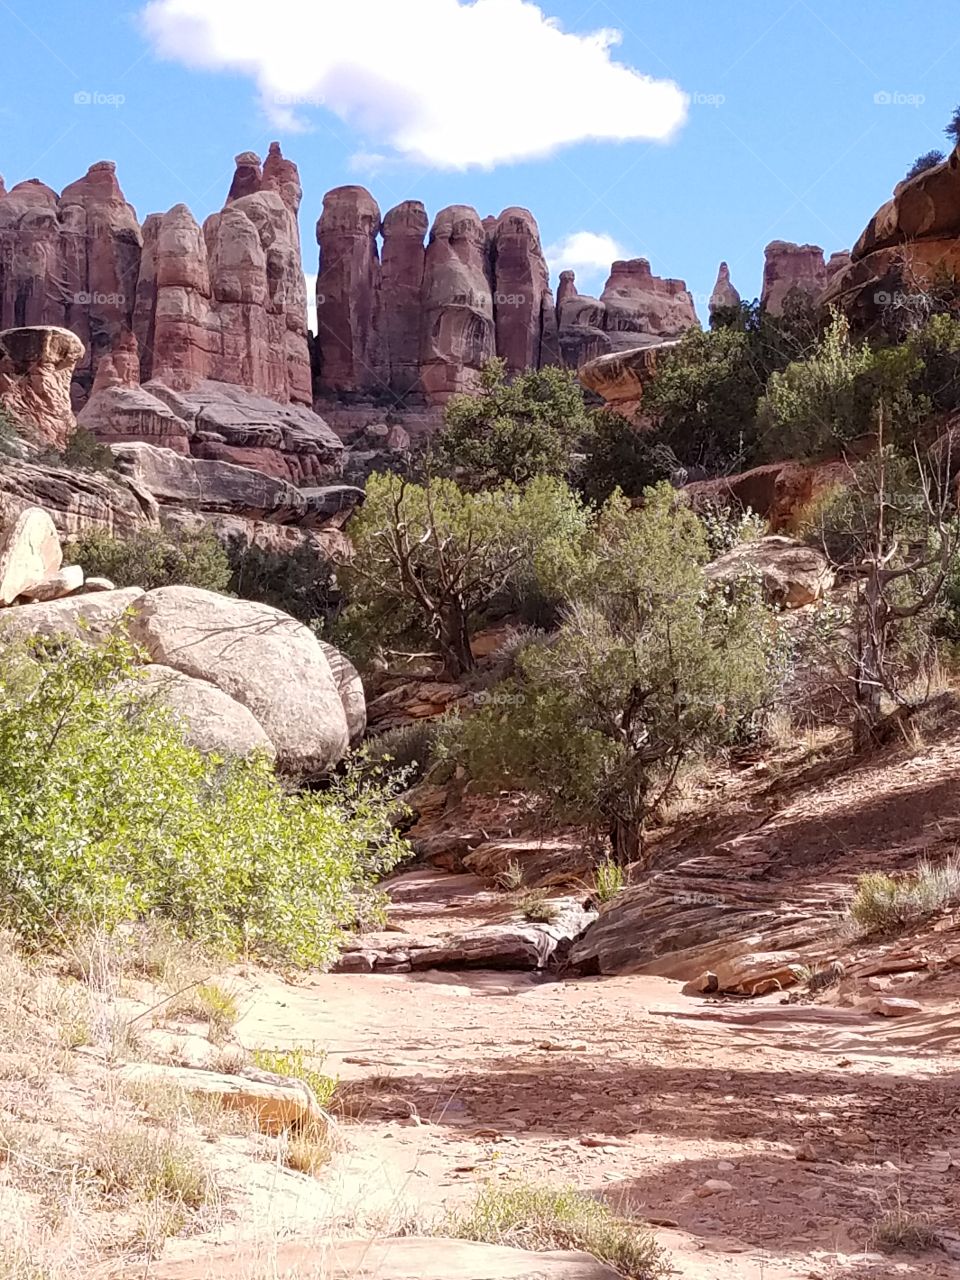 Hiking through needles at canyon